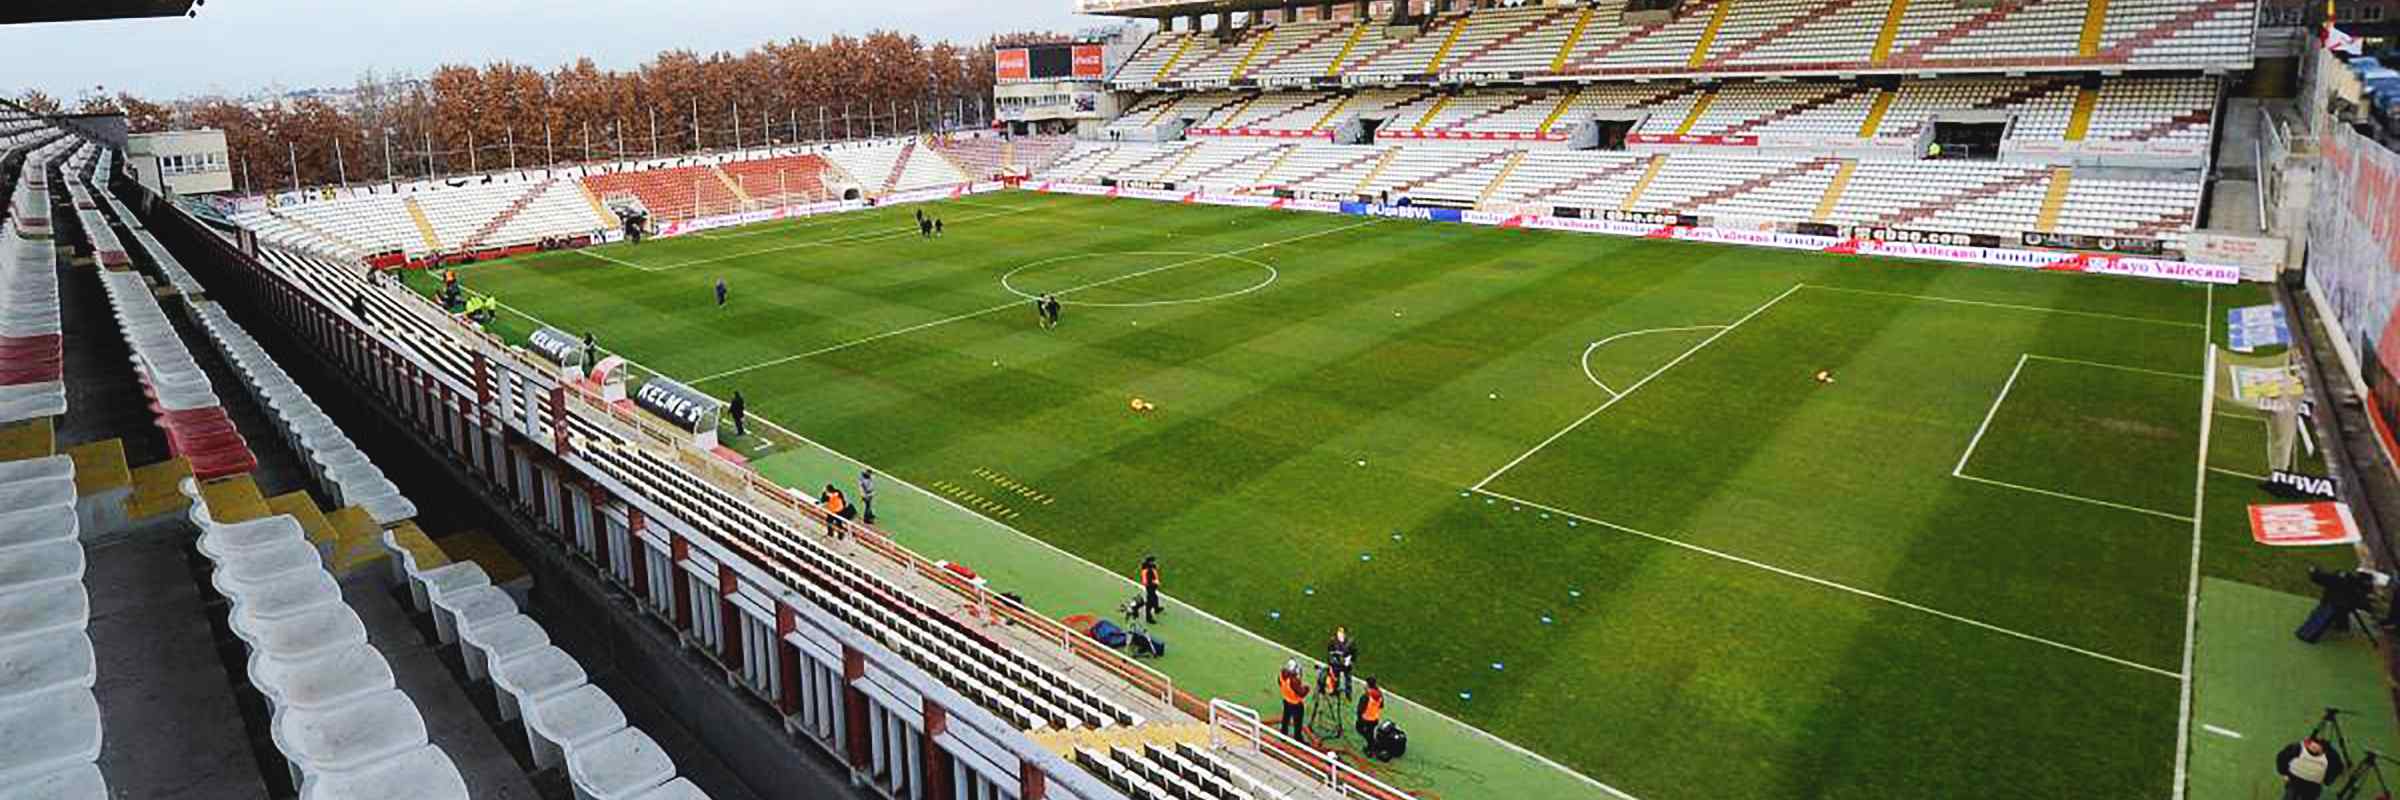 Seat-Compare.com: Estadio de Vallecas,Madrid.